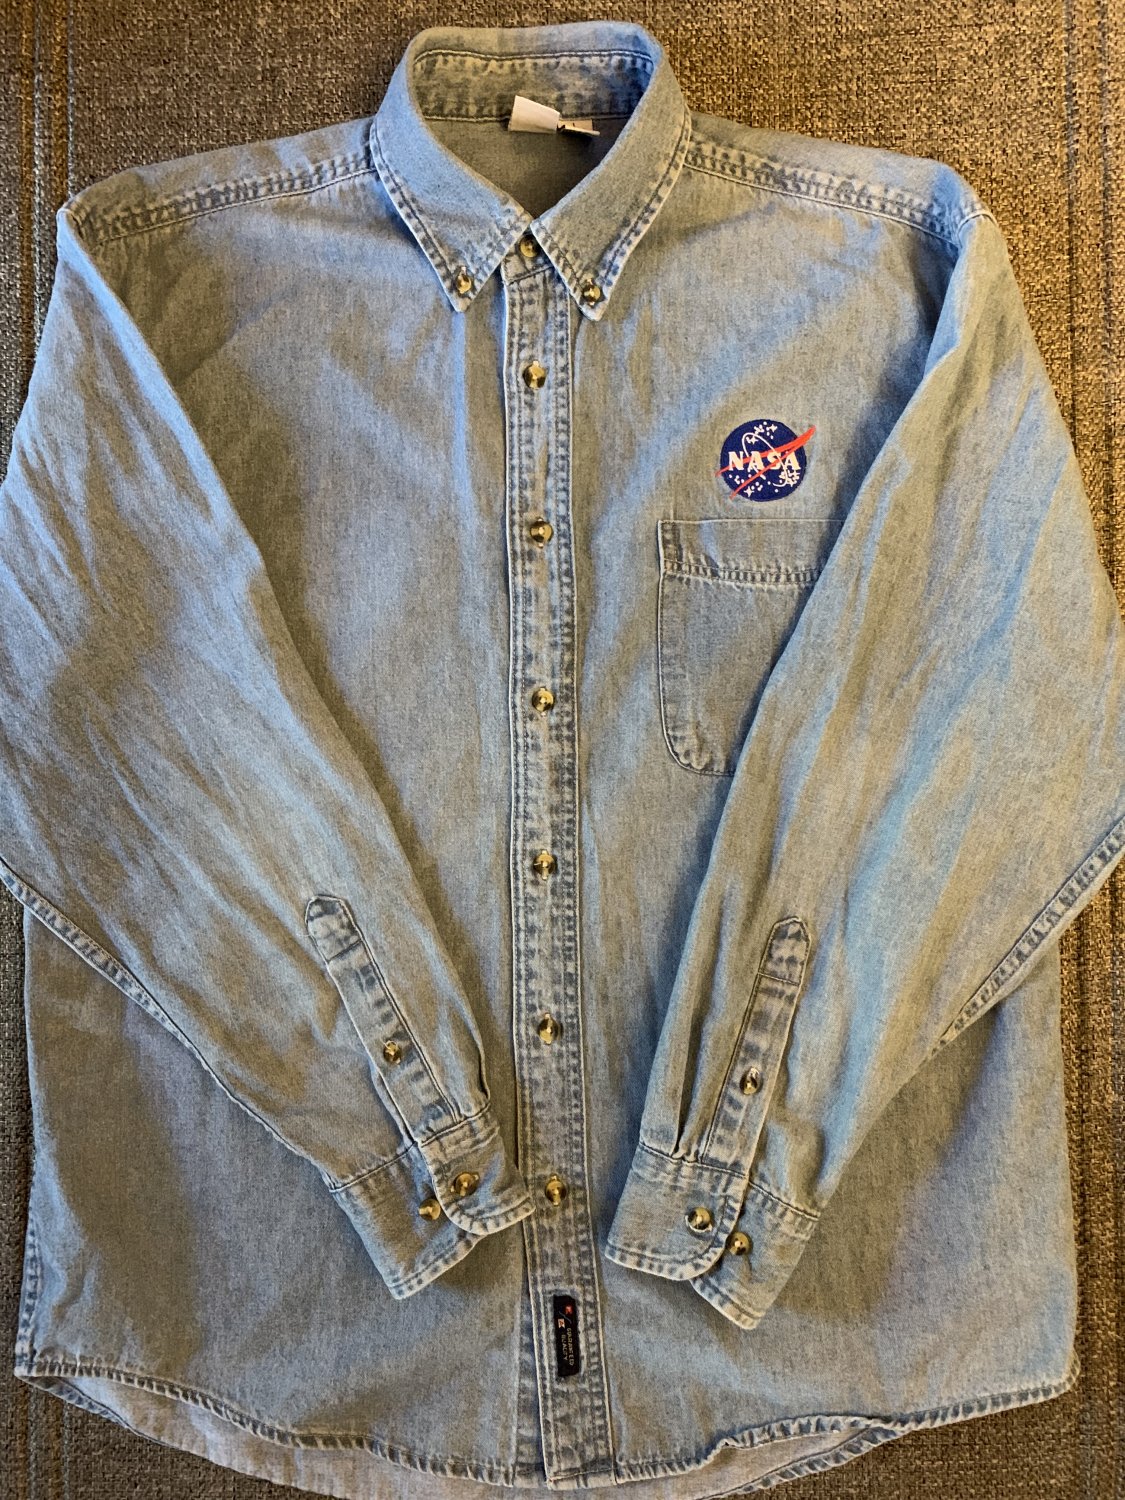 NASA Jeans Button Long Sleeve Shirt (Large)